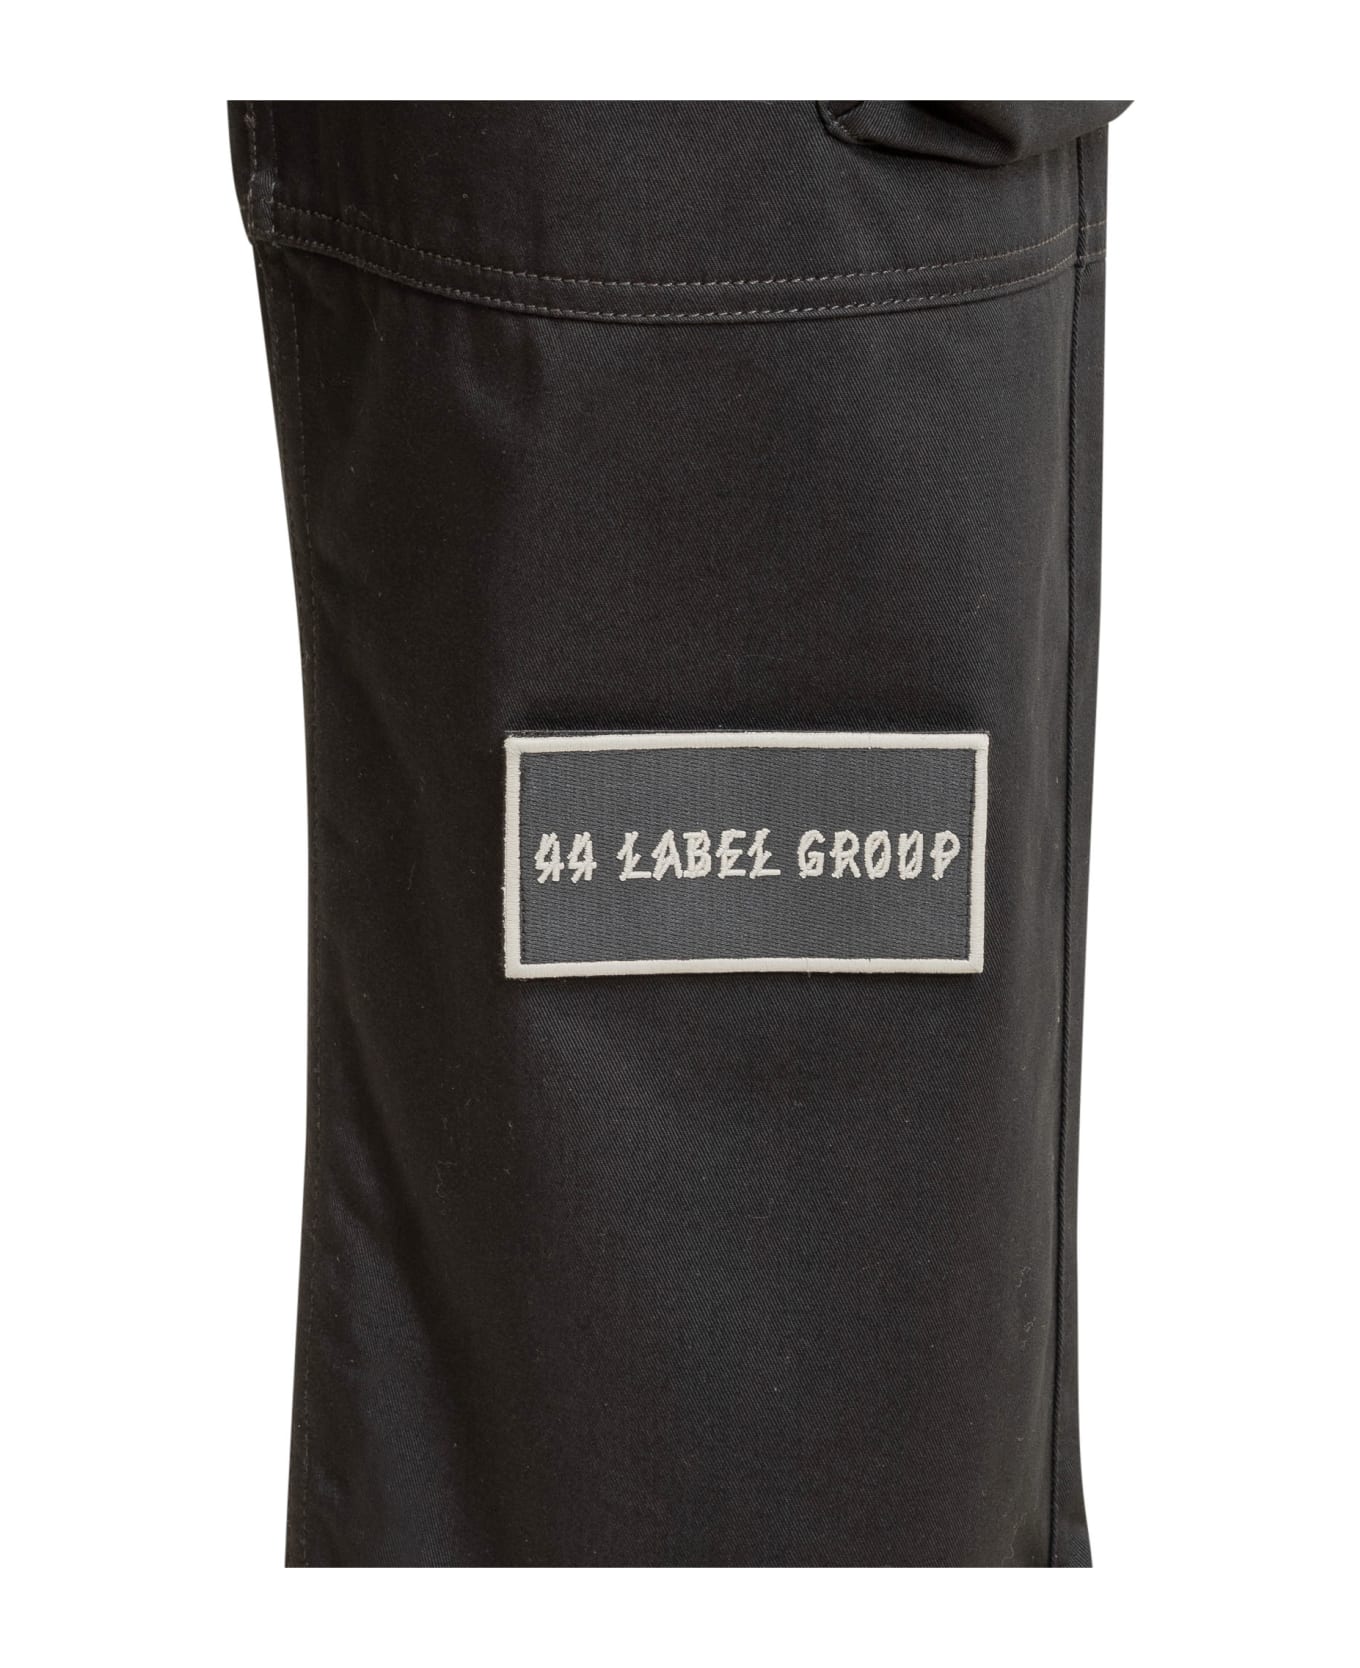 44 Label Group Cargo Pants - BLACK